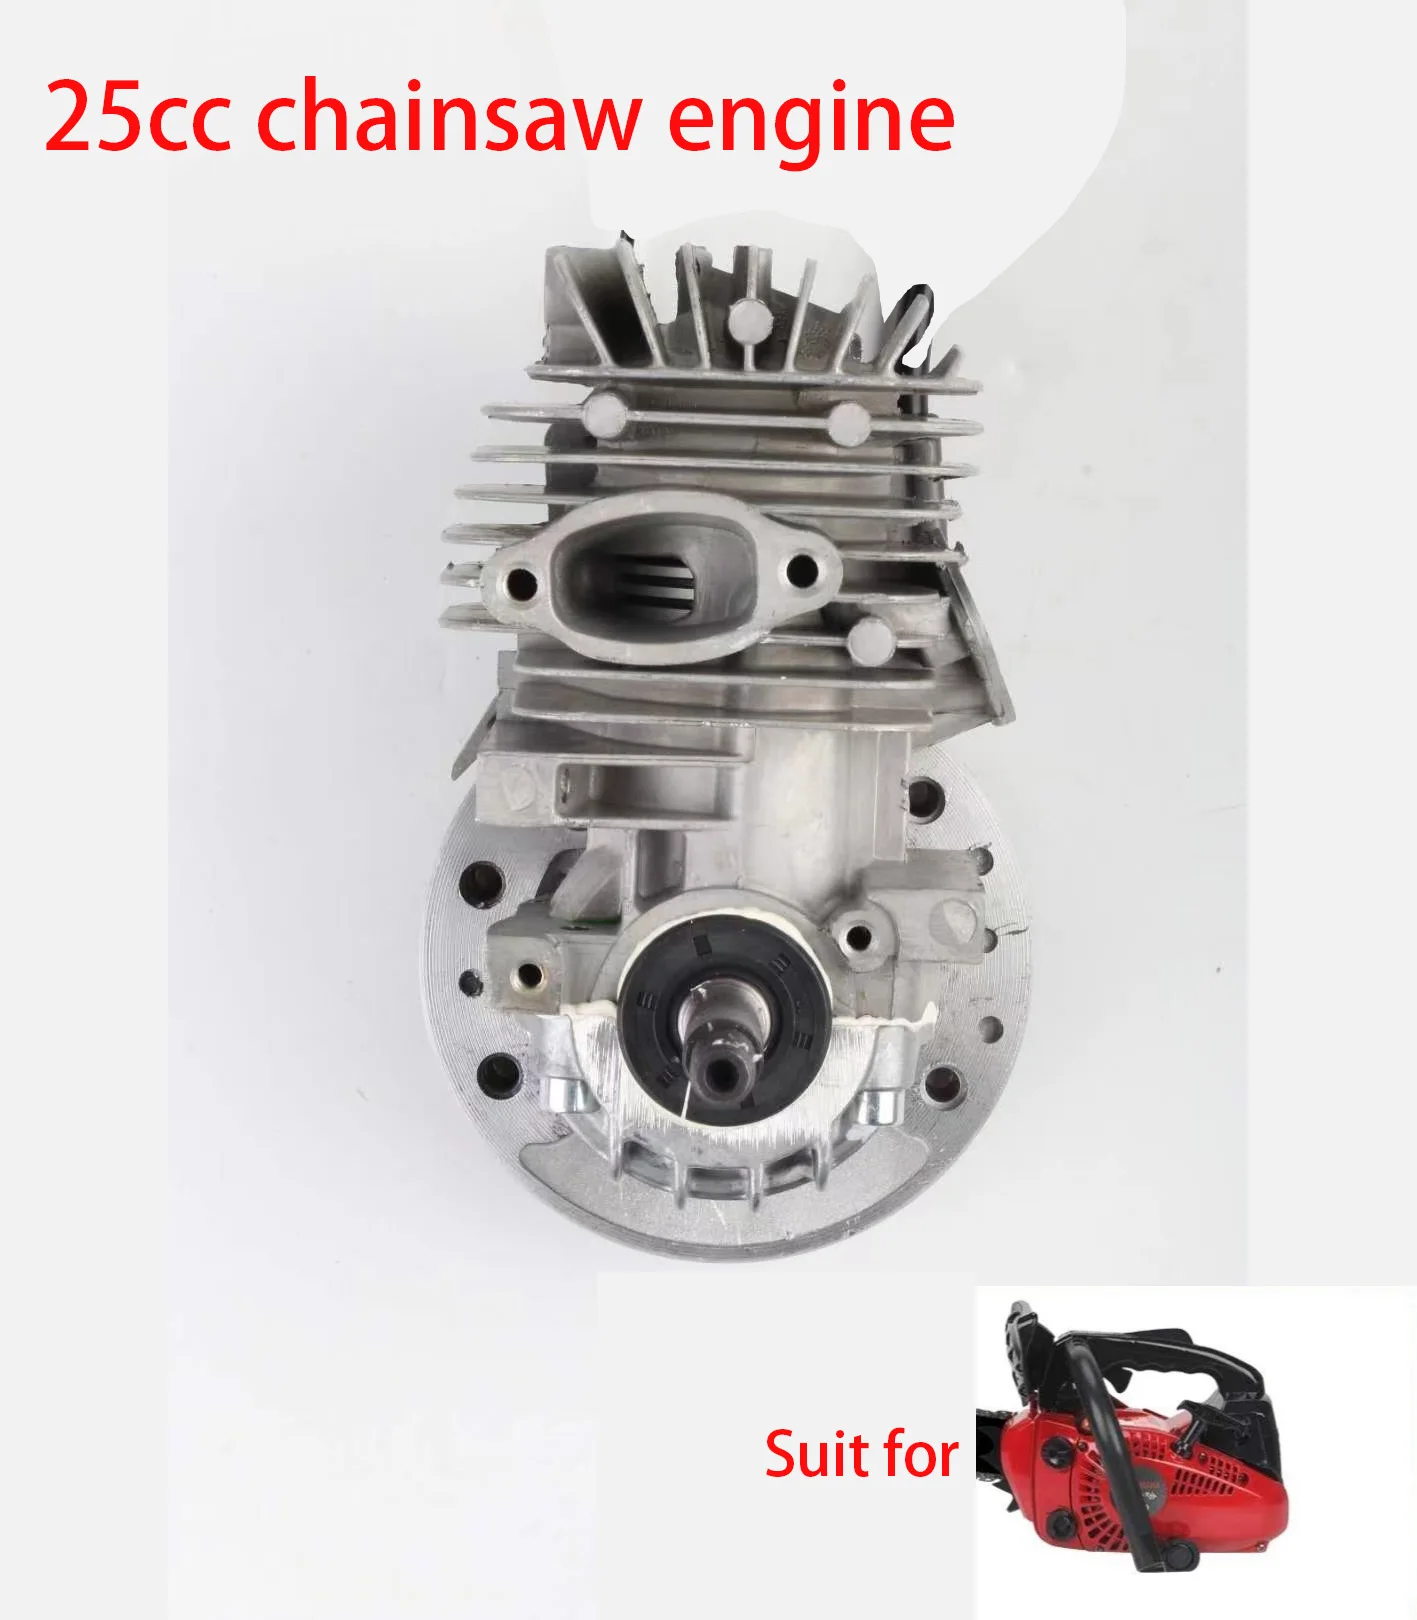 Whole Complete Engine Motor Cylinder Crankshaft Assembly For 25cc G2500 Top Handle Gasoline Chainsaw Pruner